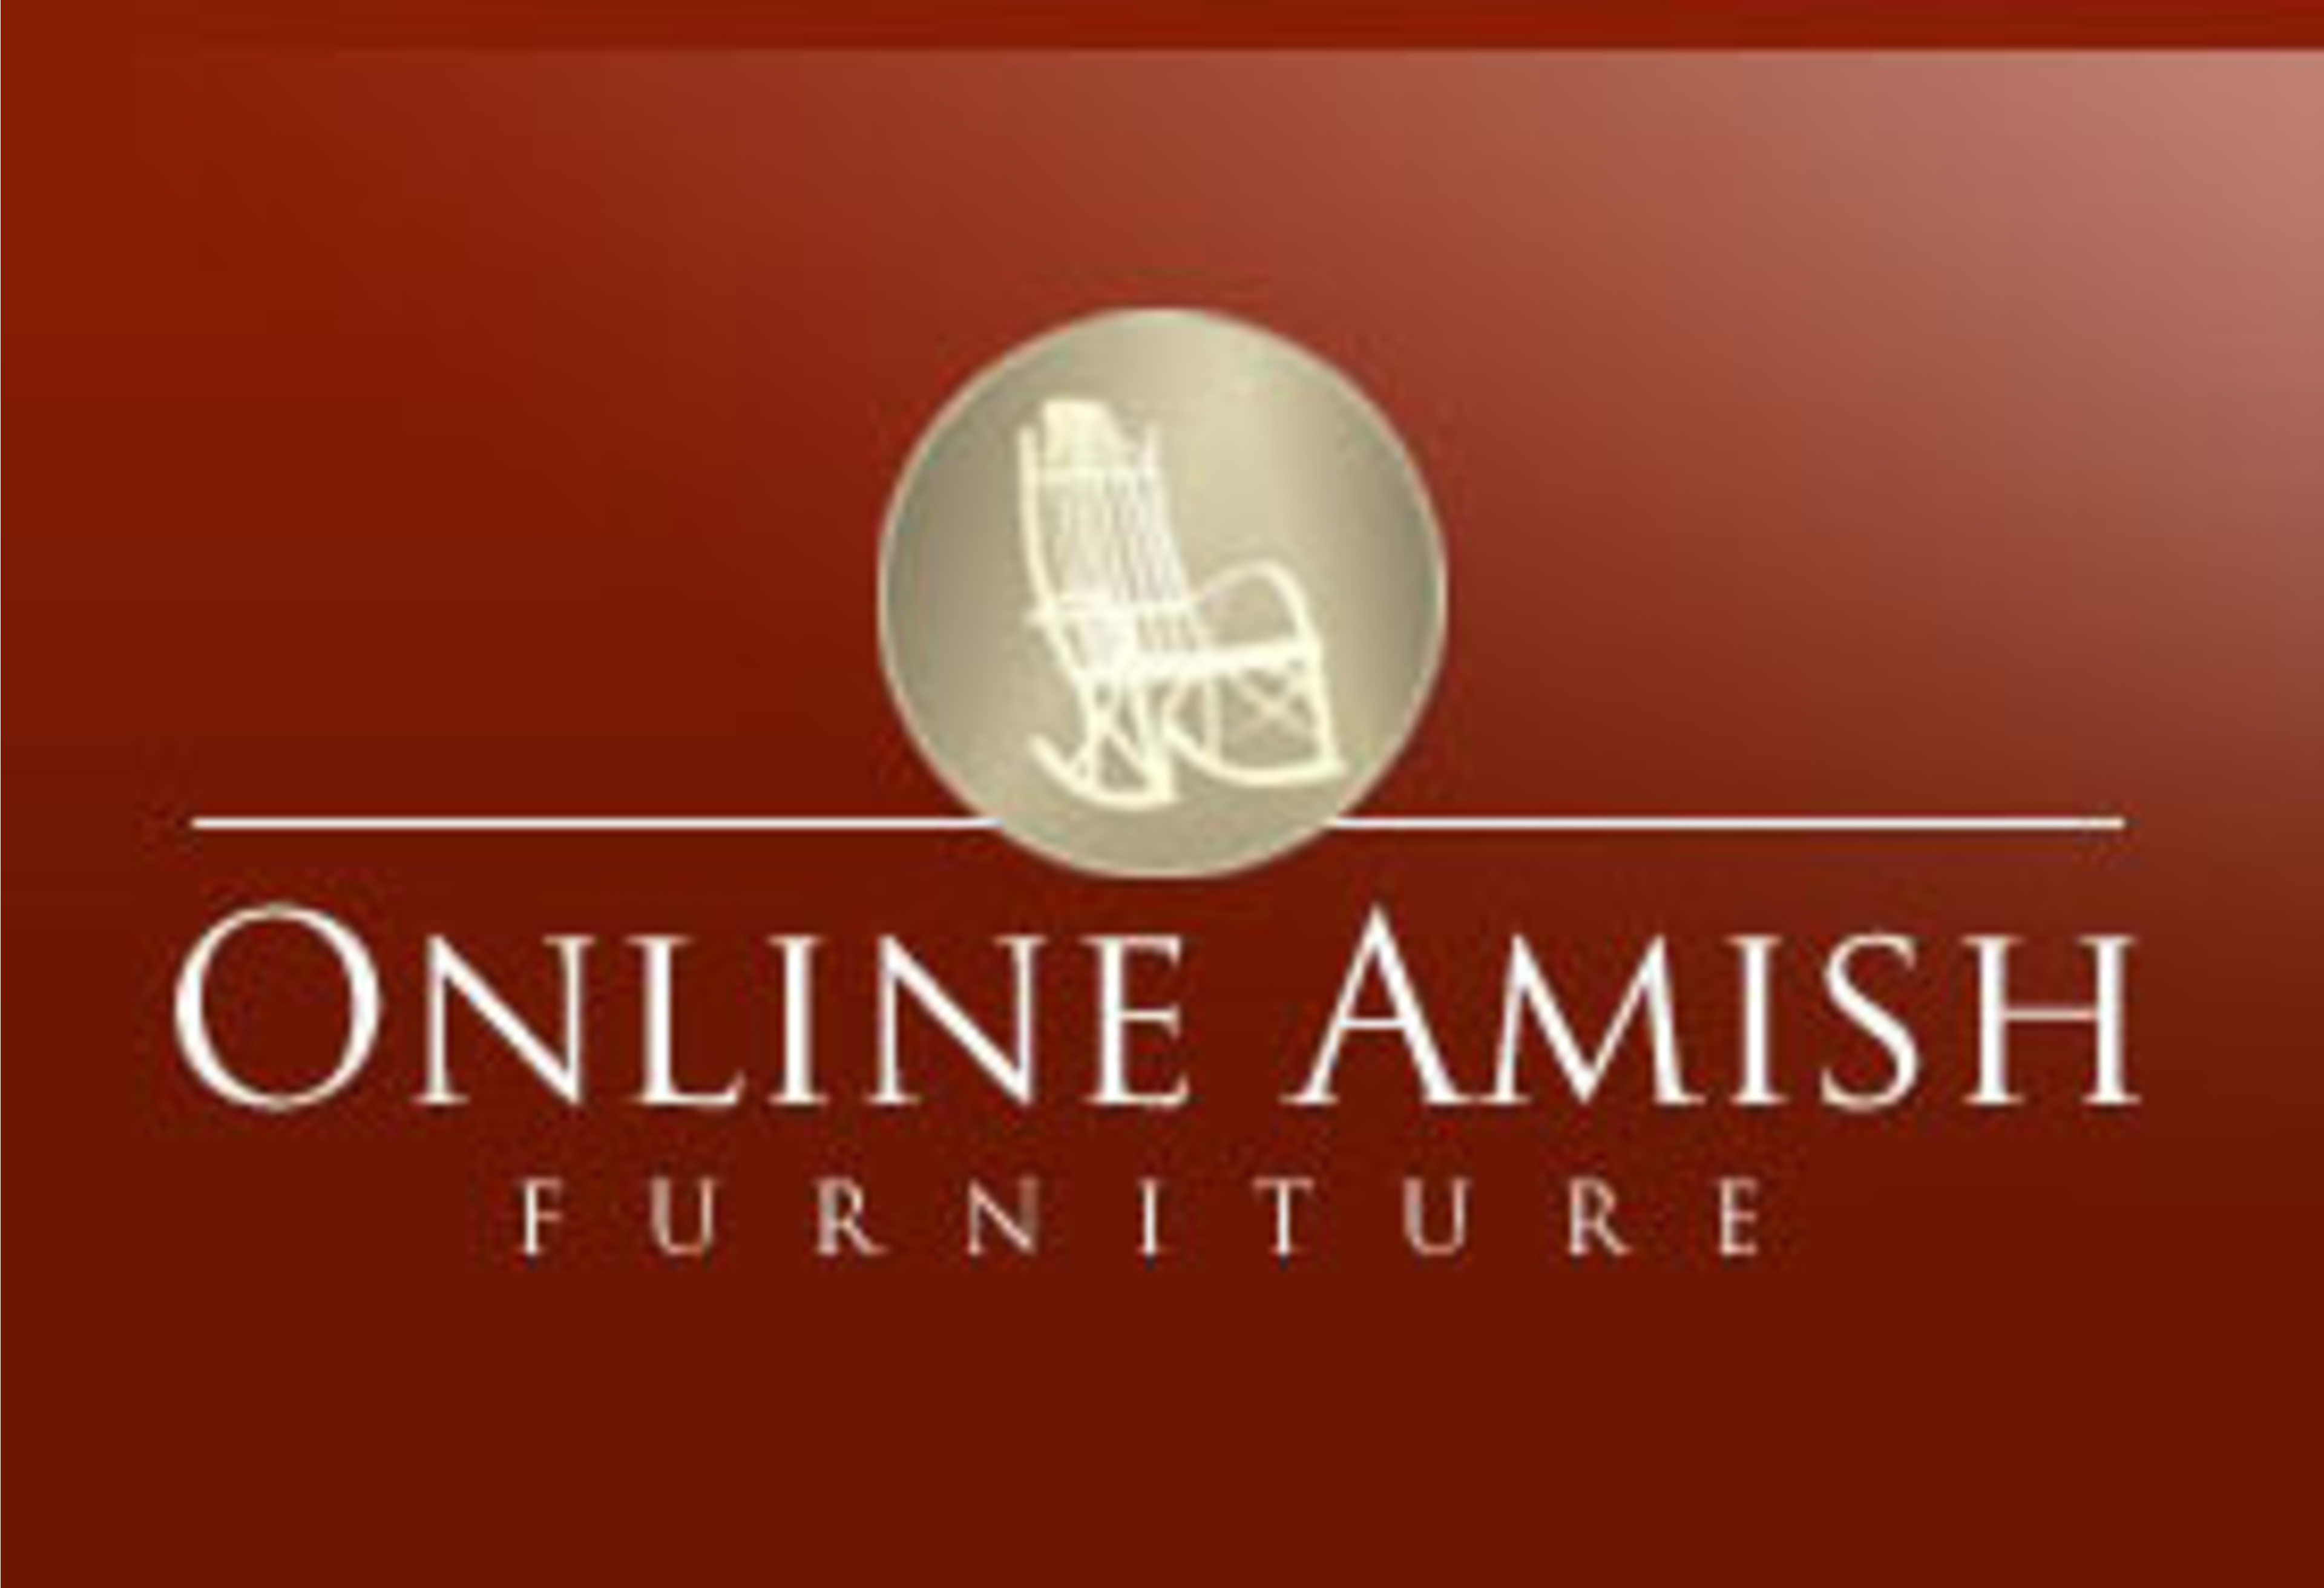 Online Amish FurnitureCode